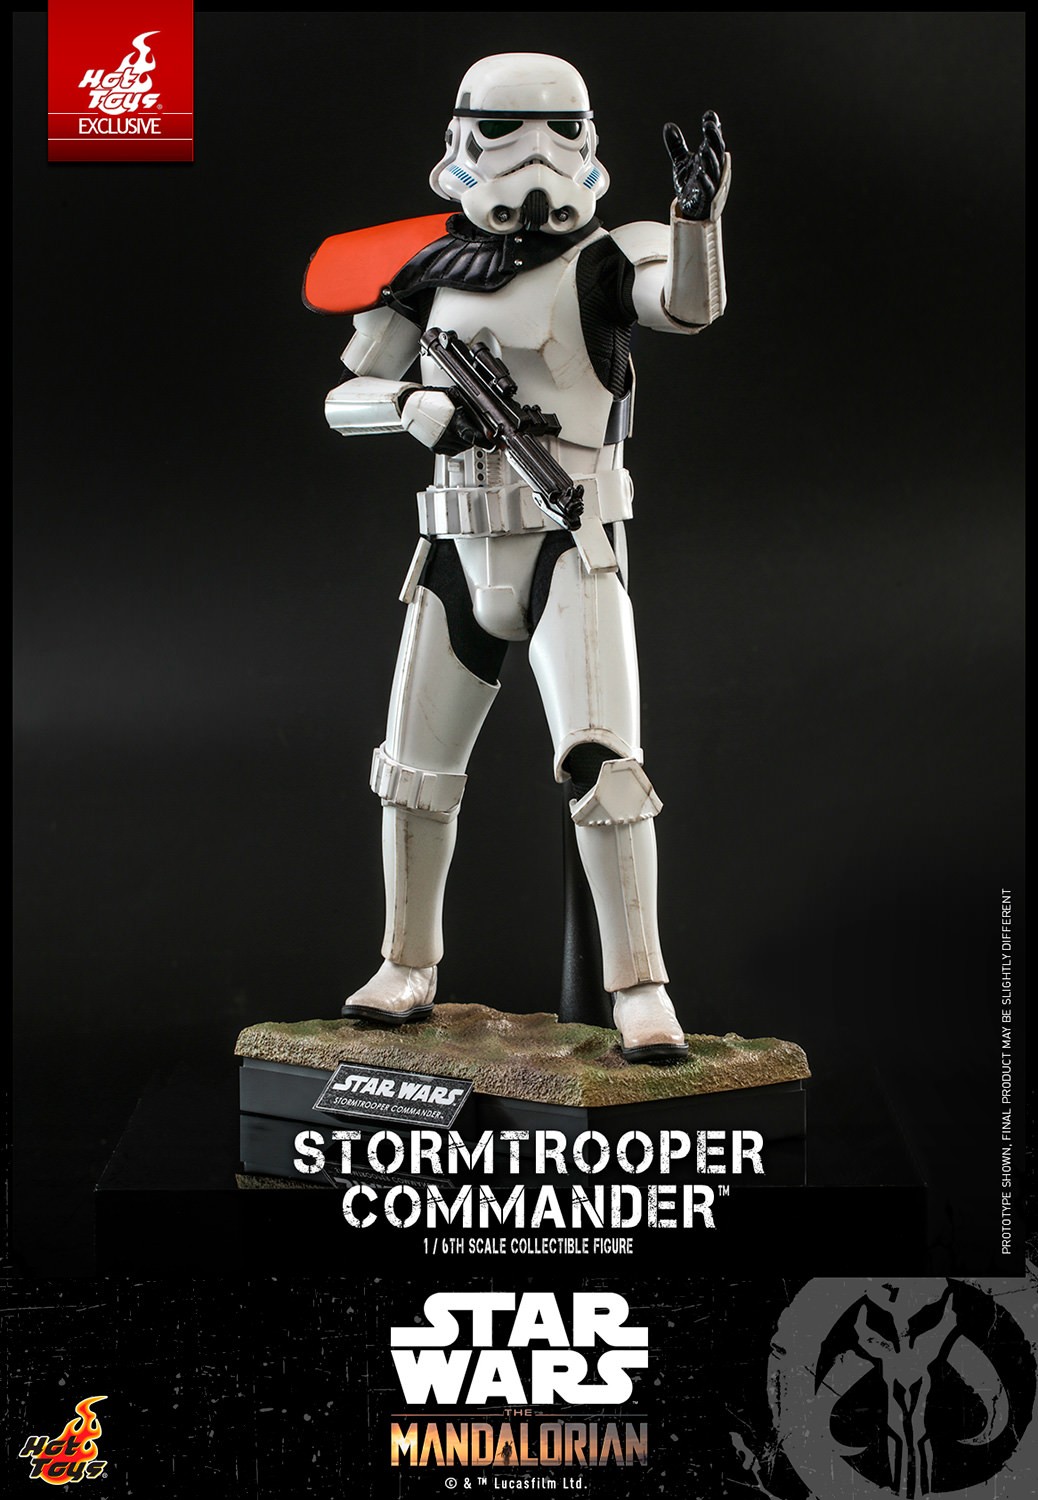 Stormtrooper Commander™ Exclusive Edition (Prototype Shown) View 10